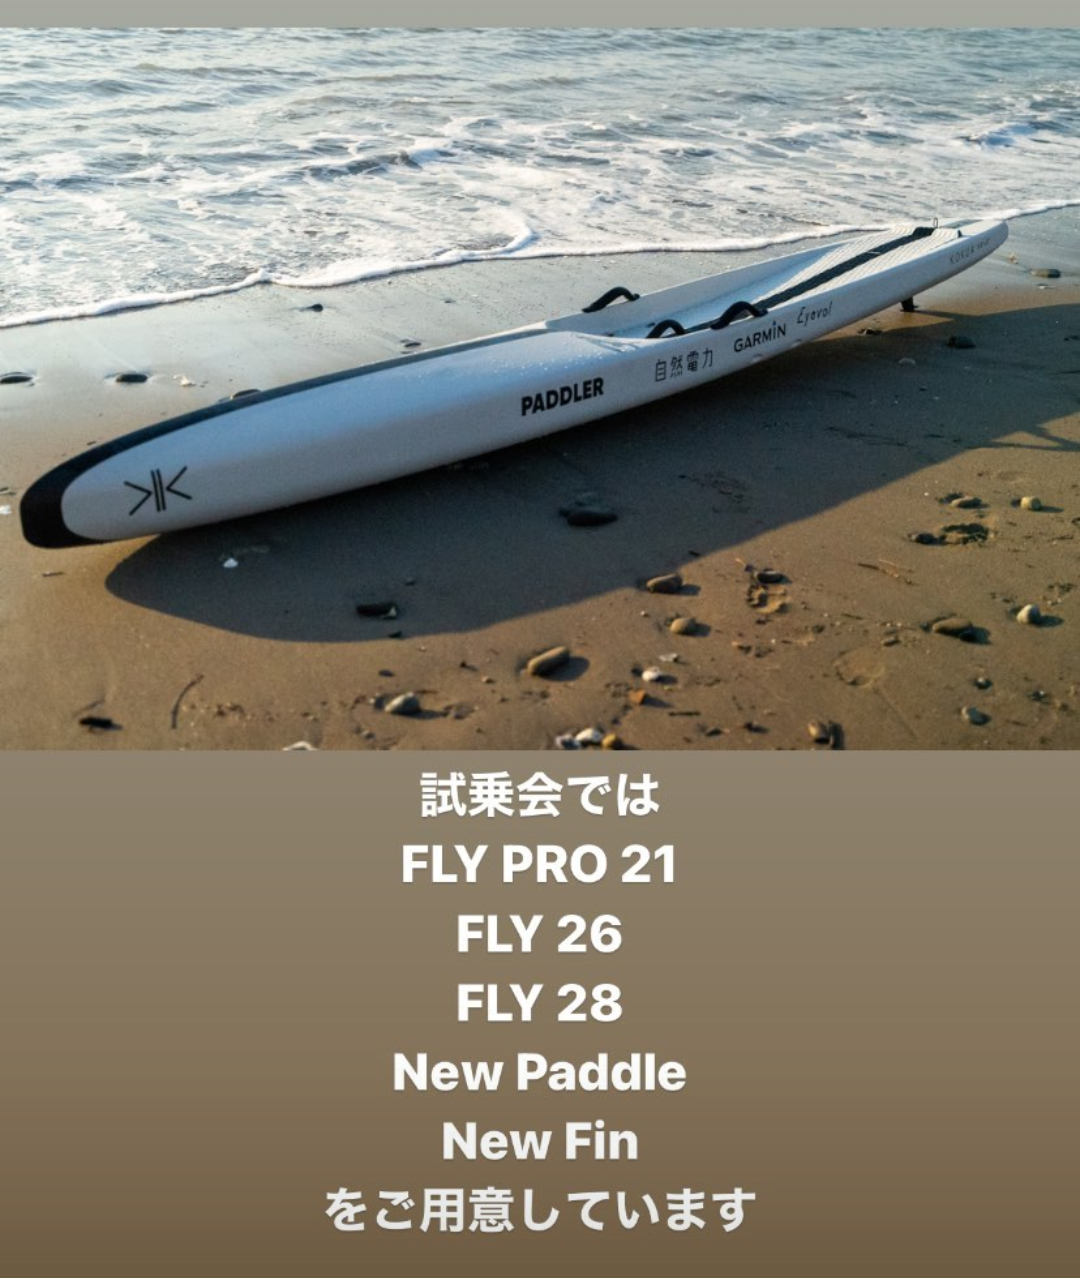 KOKUA FLY PRO試乗会 - SUP NEWS